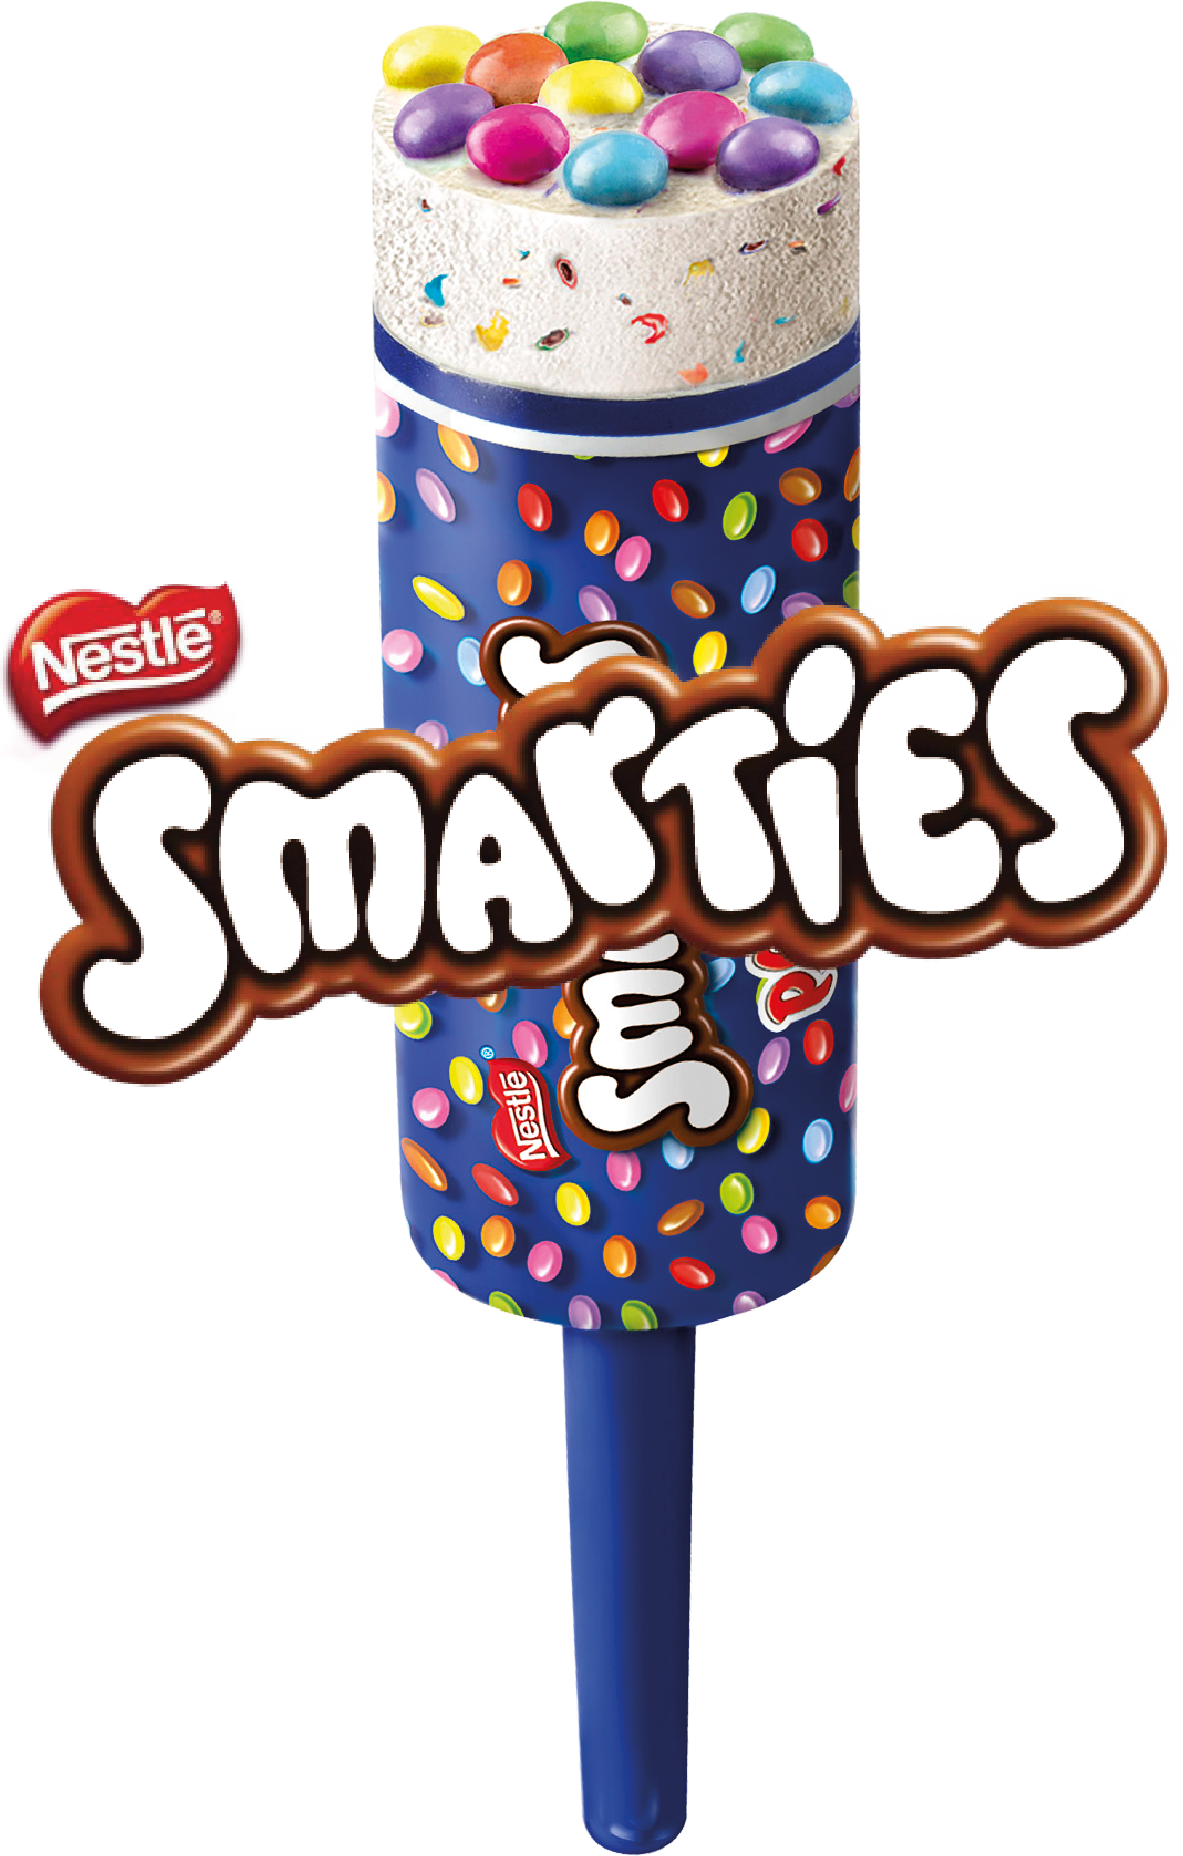 Nestle Smarties Pop Up Ice Cream